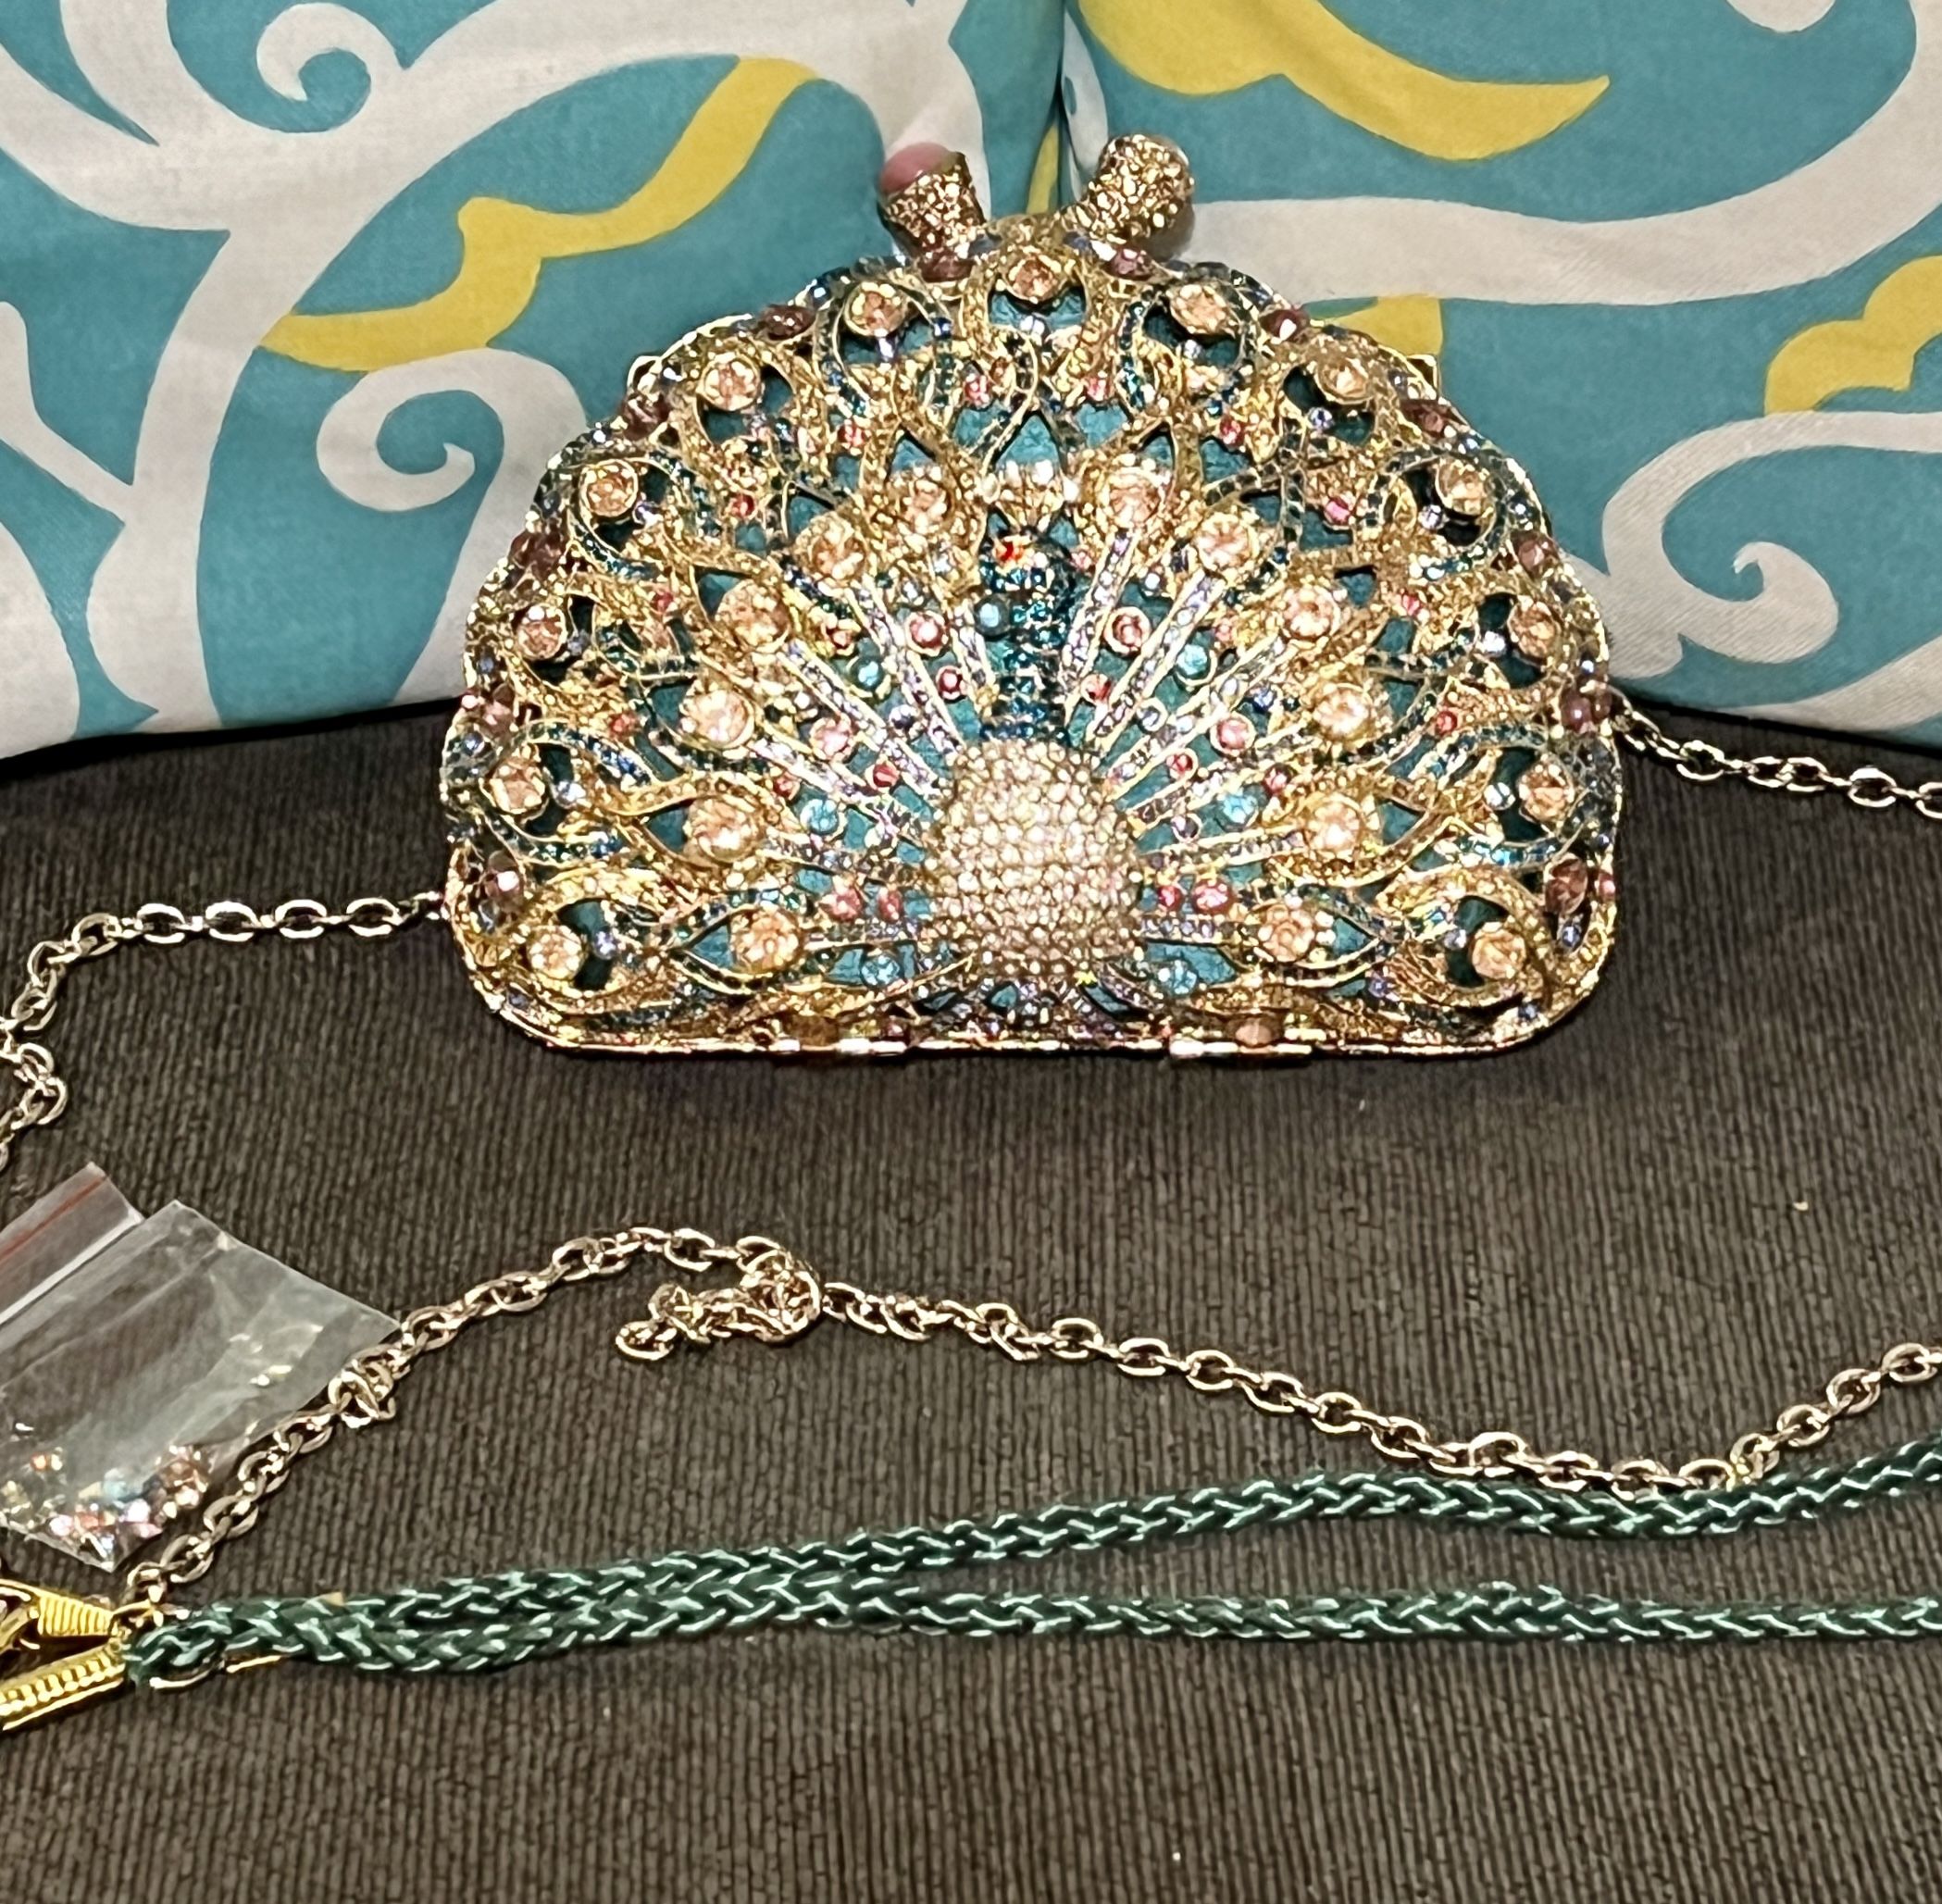 Peacock Crystal & Rhinestone Ornate Bag/Clutch